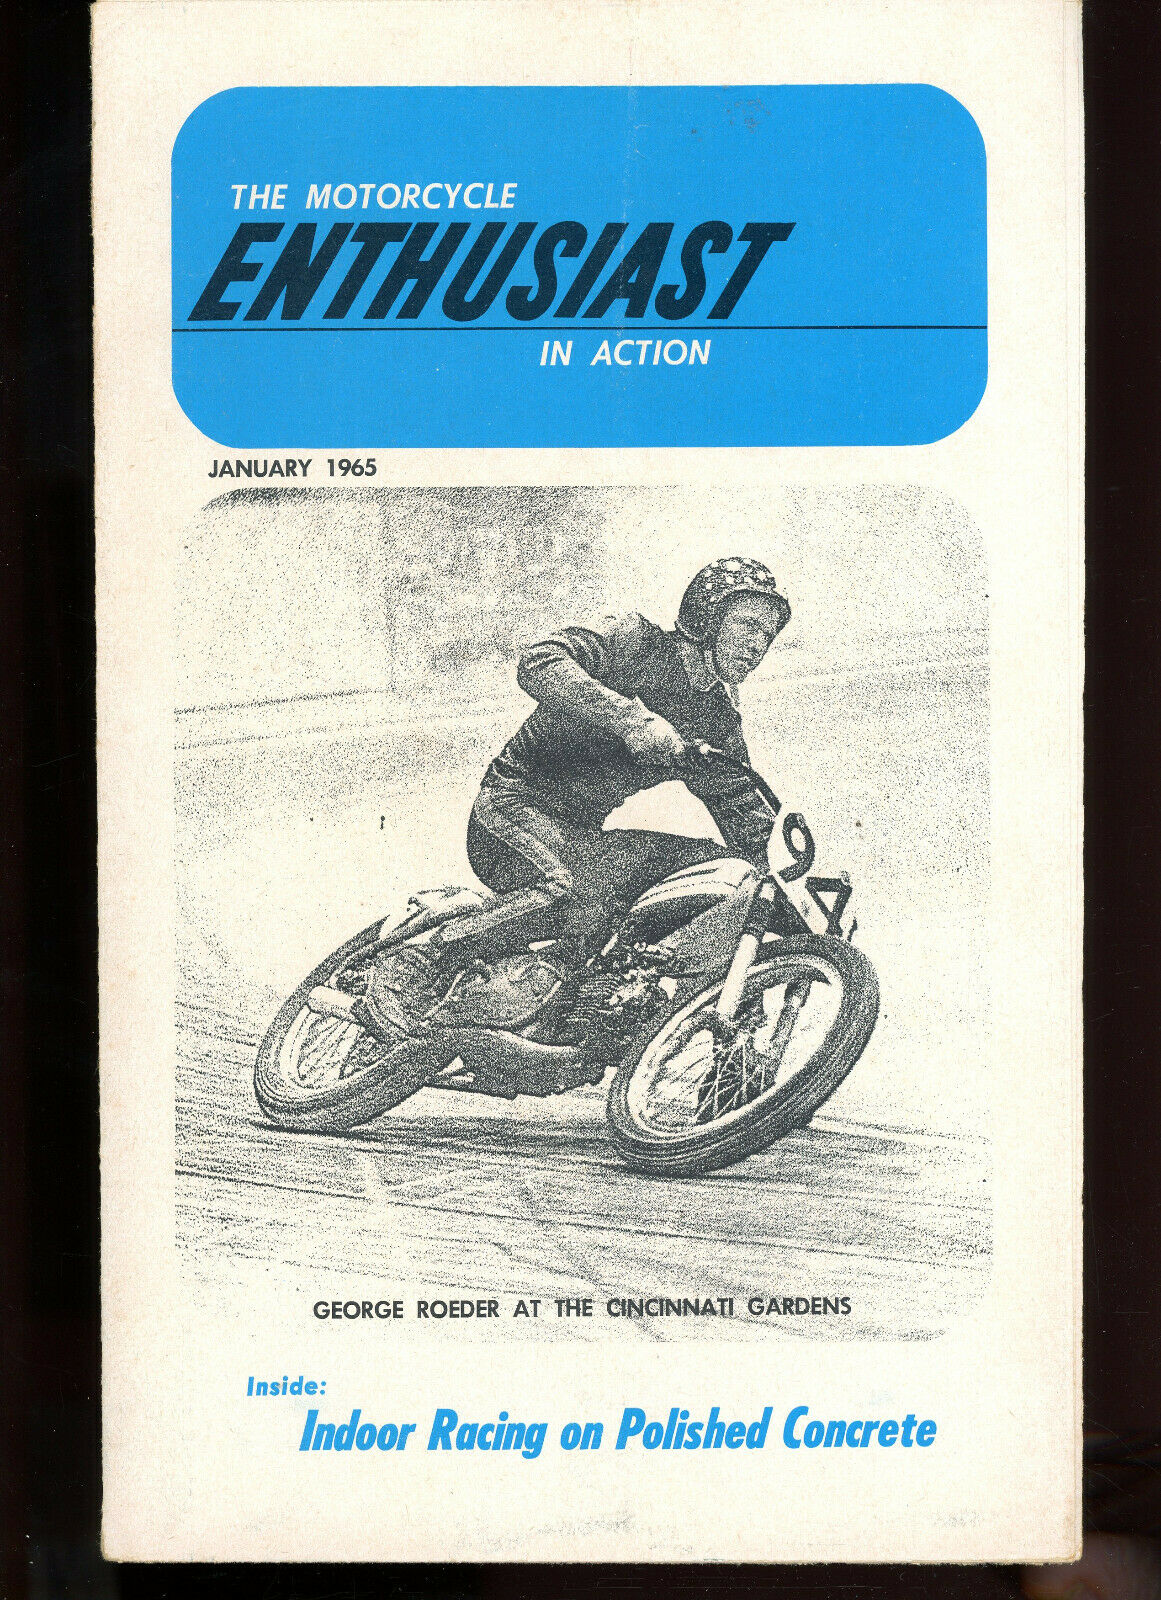 Motorcycle Enthusiast In Action-harley Davidson-jan. 1965-fargo, North Dakota